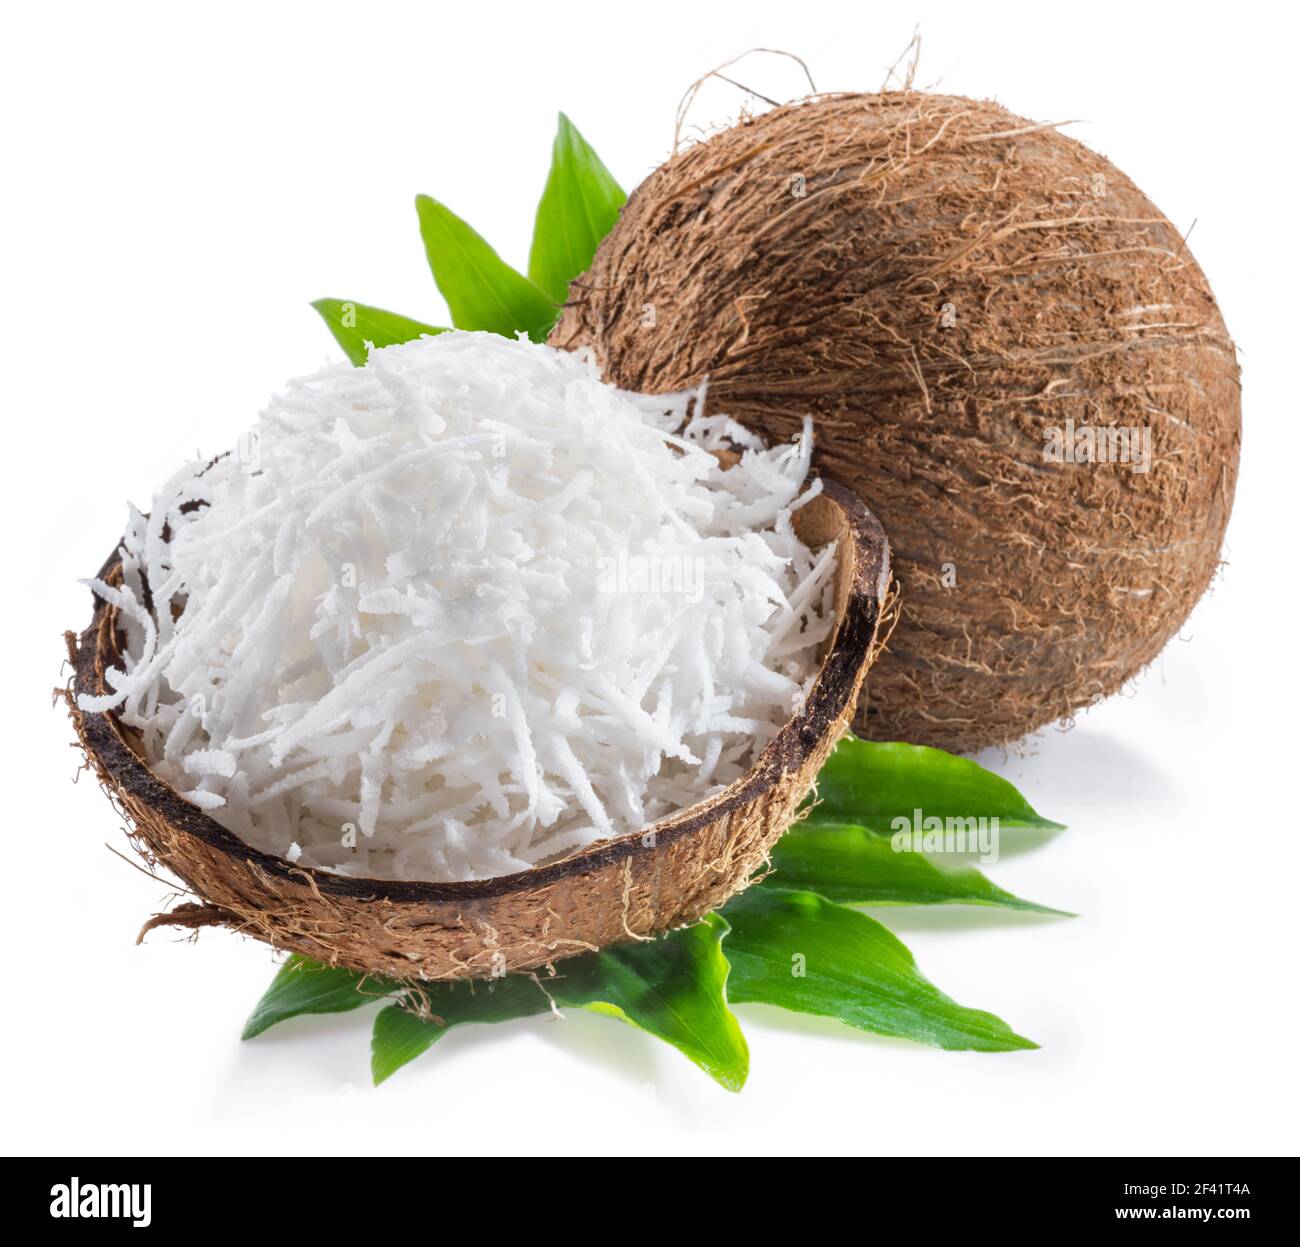 Cracked coconut fruit with white shredded flesh and whole coconut isolated on white background. Stock Photo